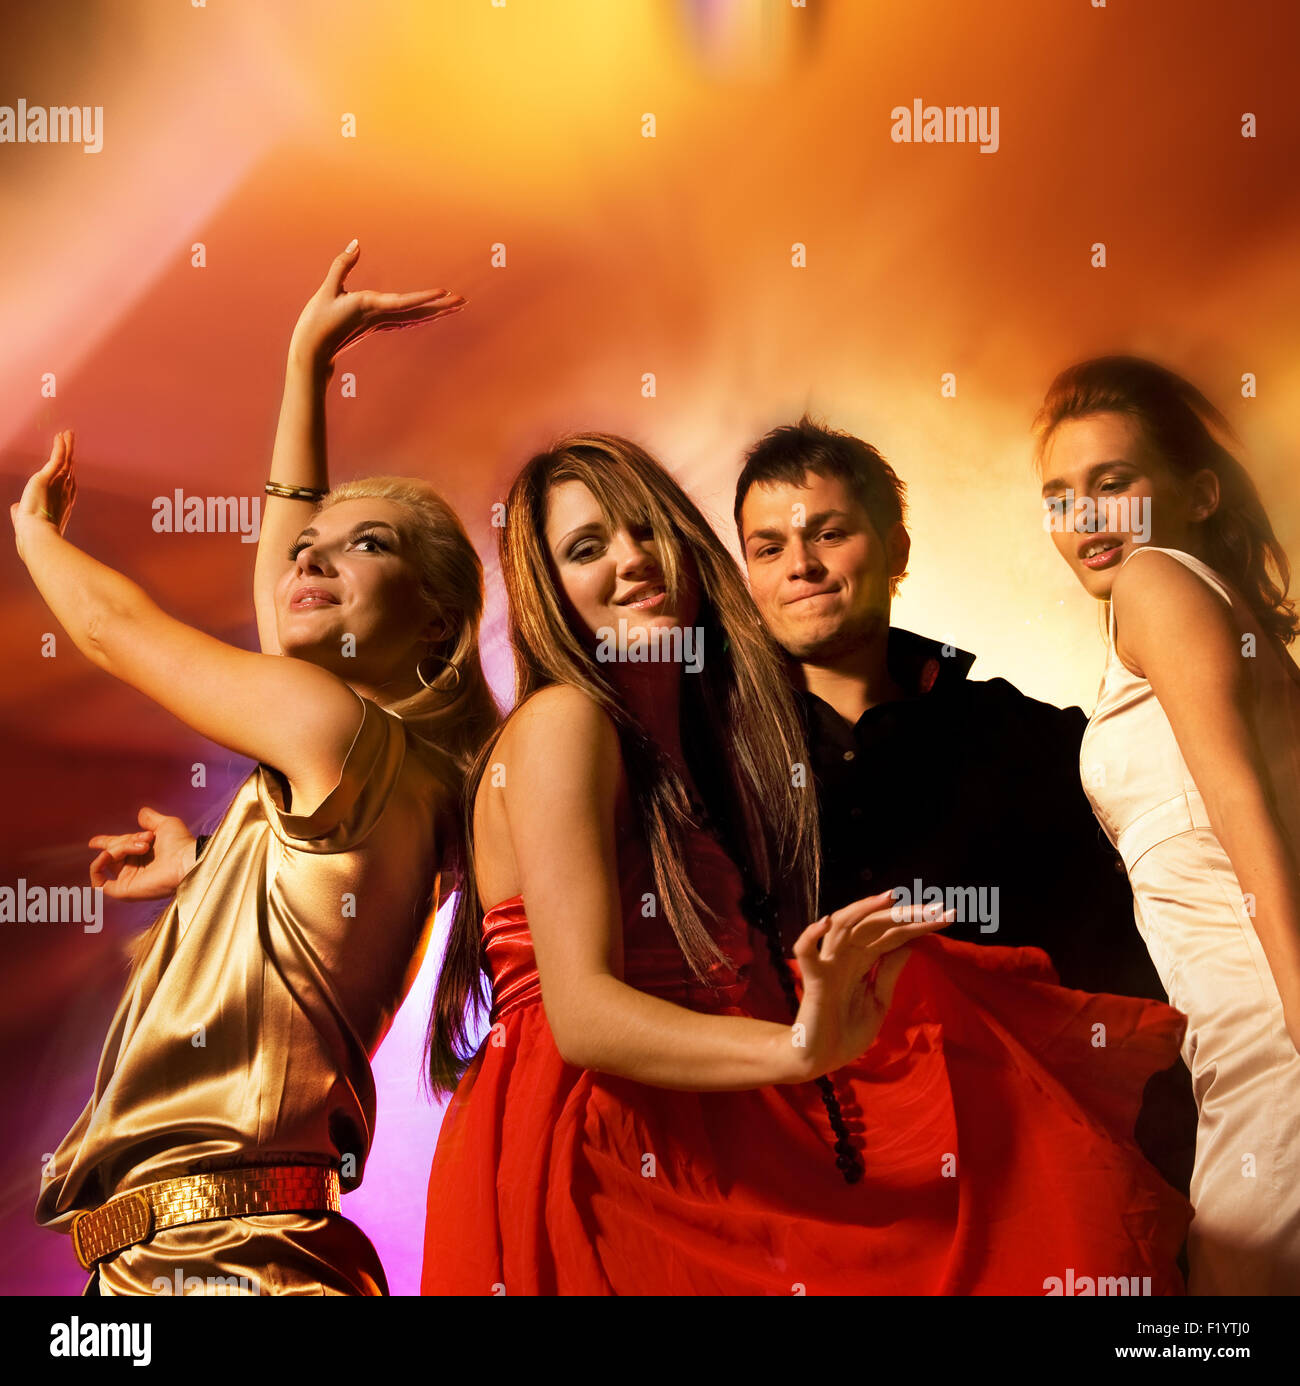 People dancing in the night club Stock Photo - Alamy